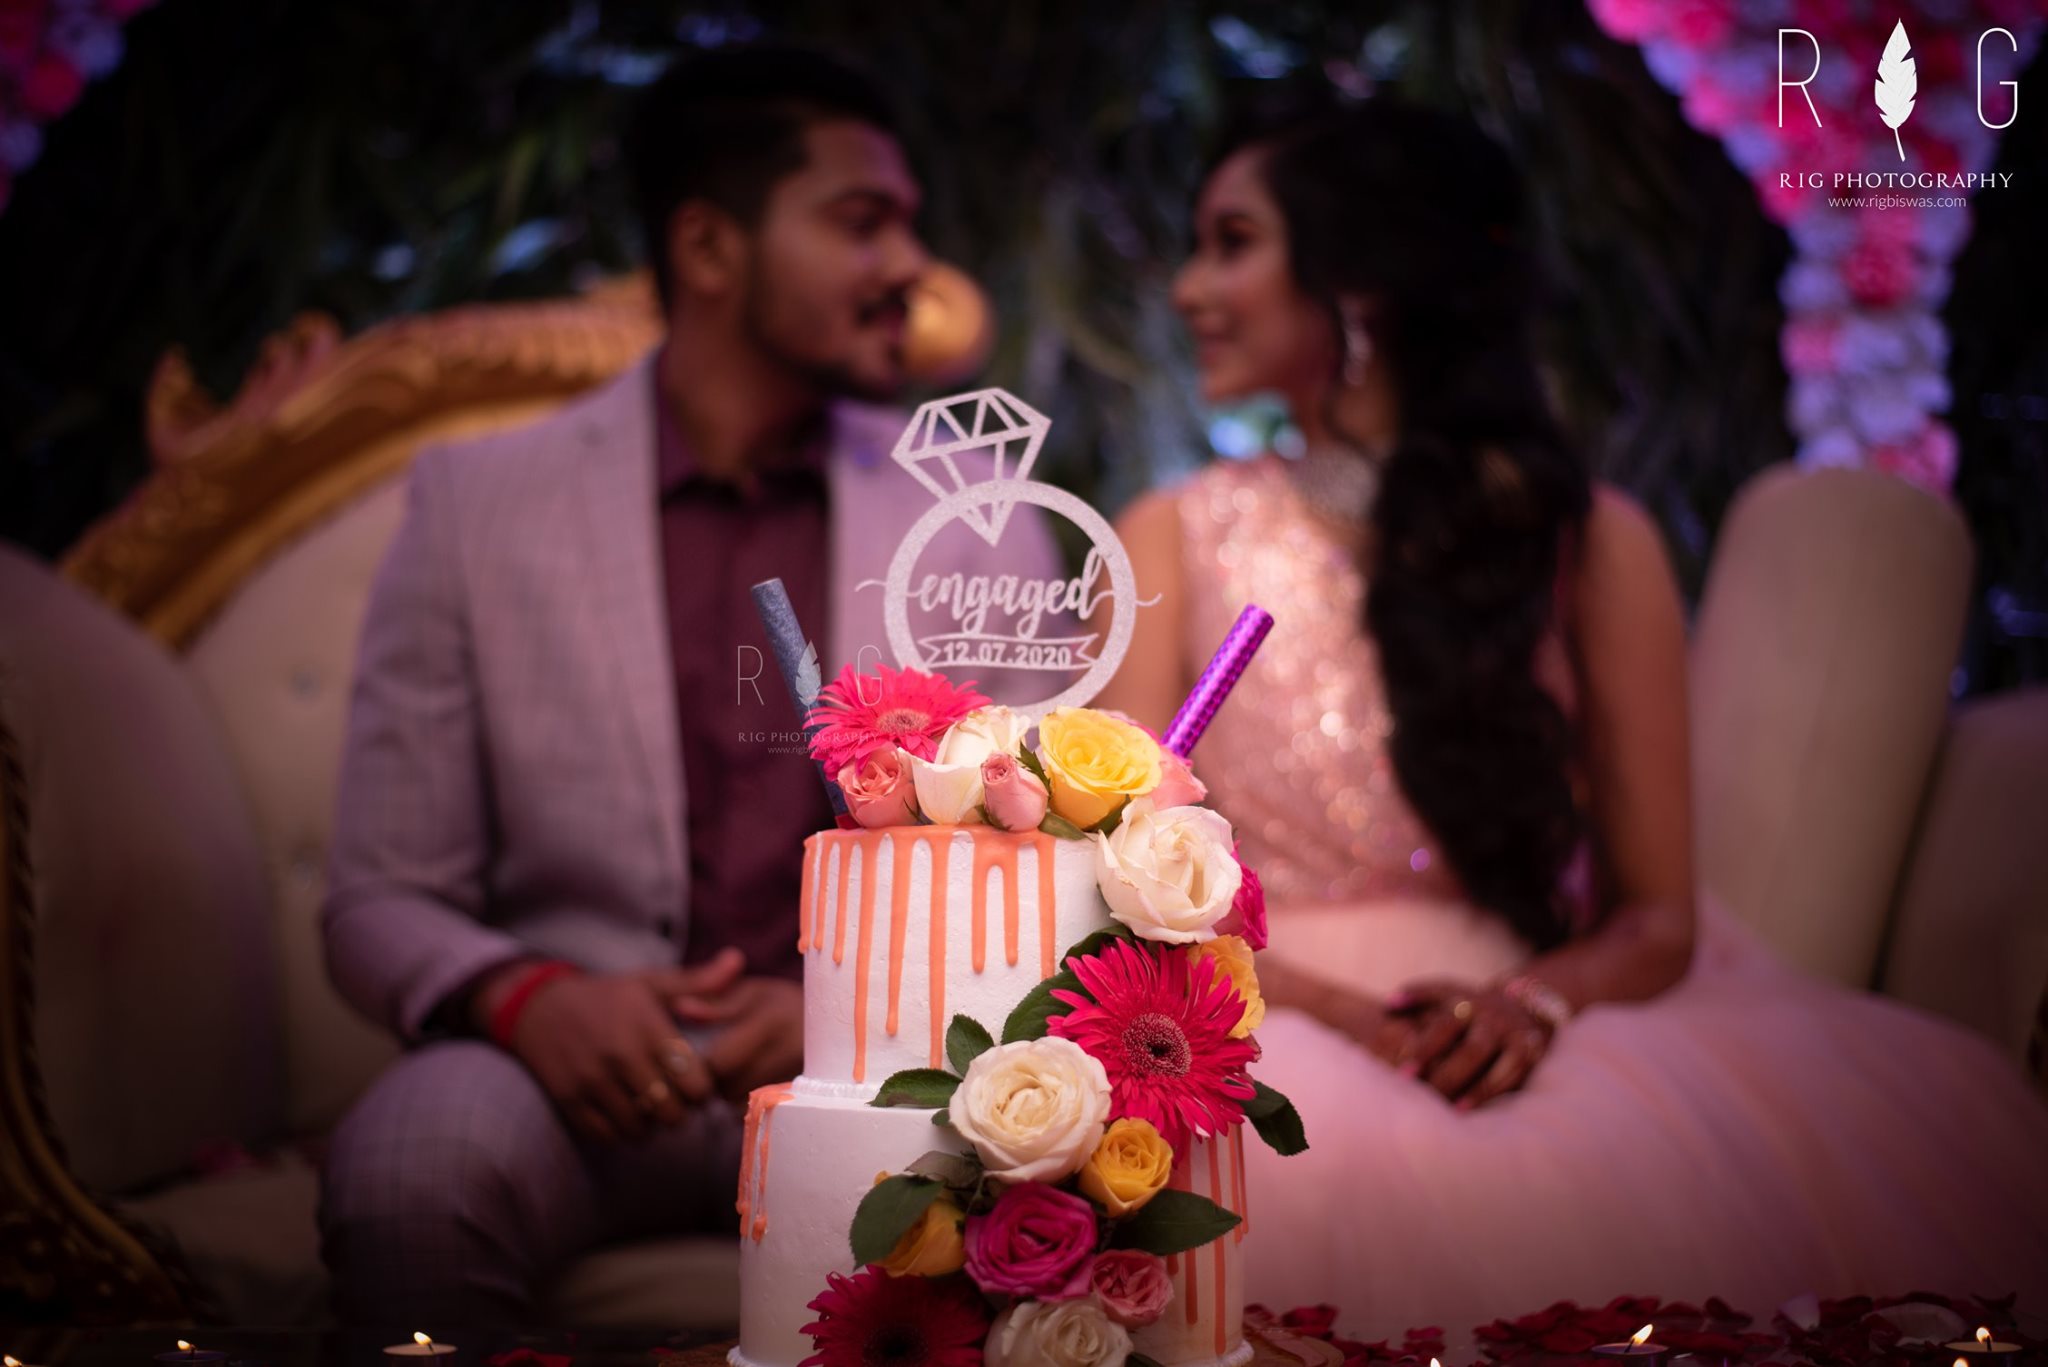 Beautiful engagement cake for a beautiful couple ♥️ #cake #cakenestin  #vanillacake #bakersfield #indore #indorecakes #patisserie… | Instagram